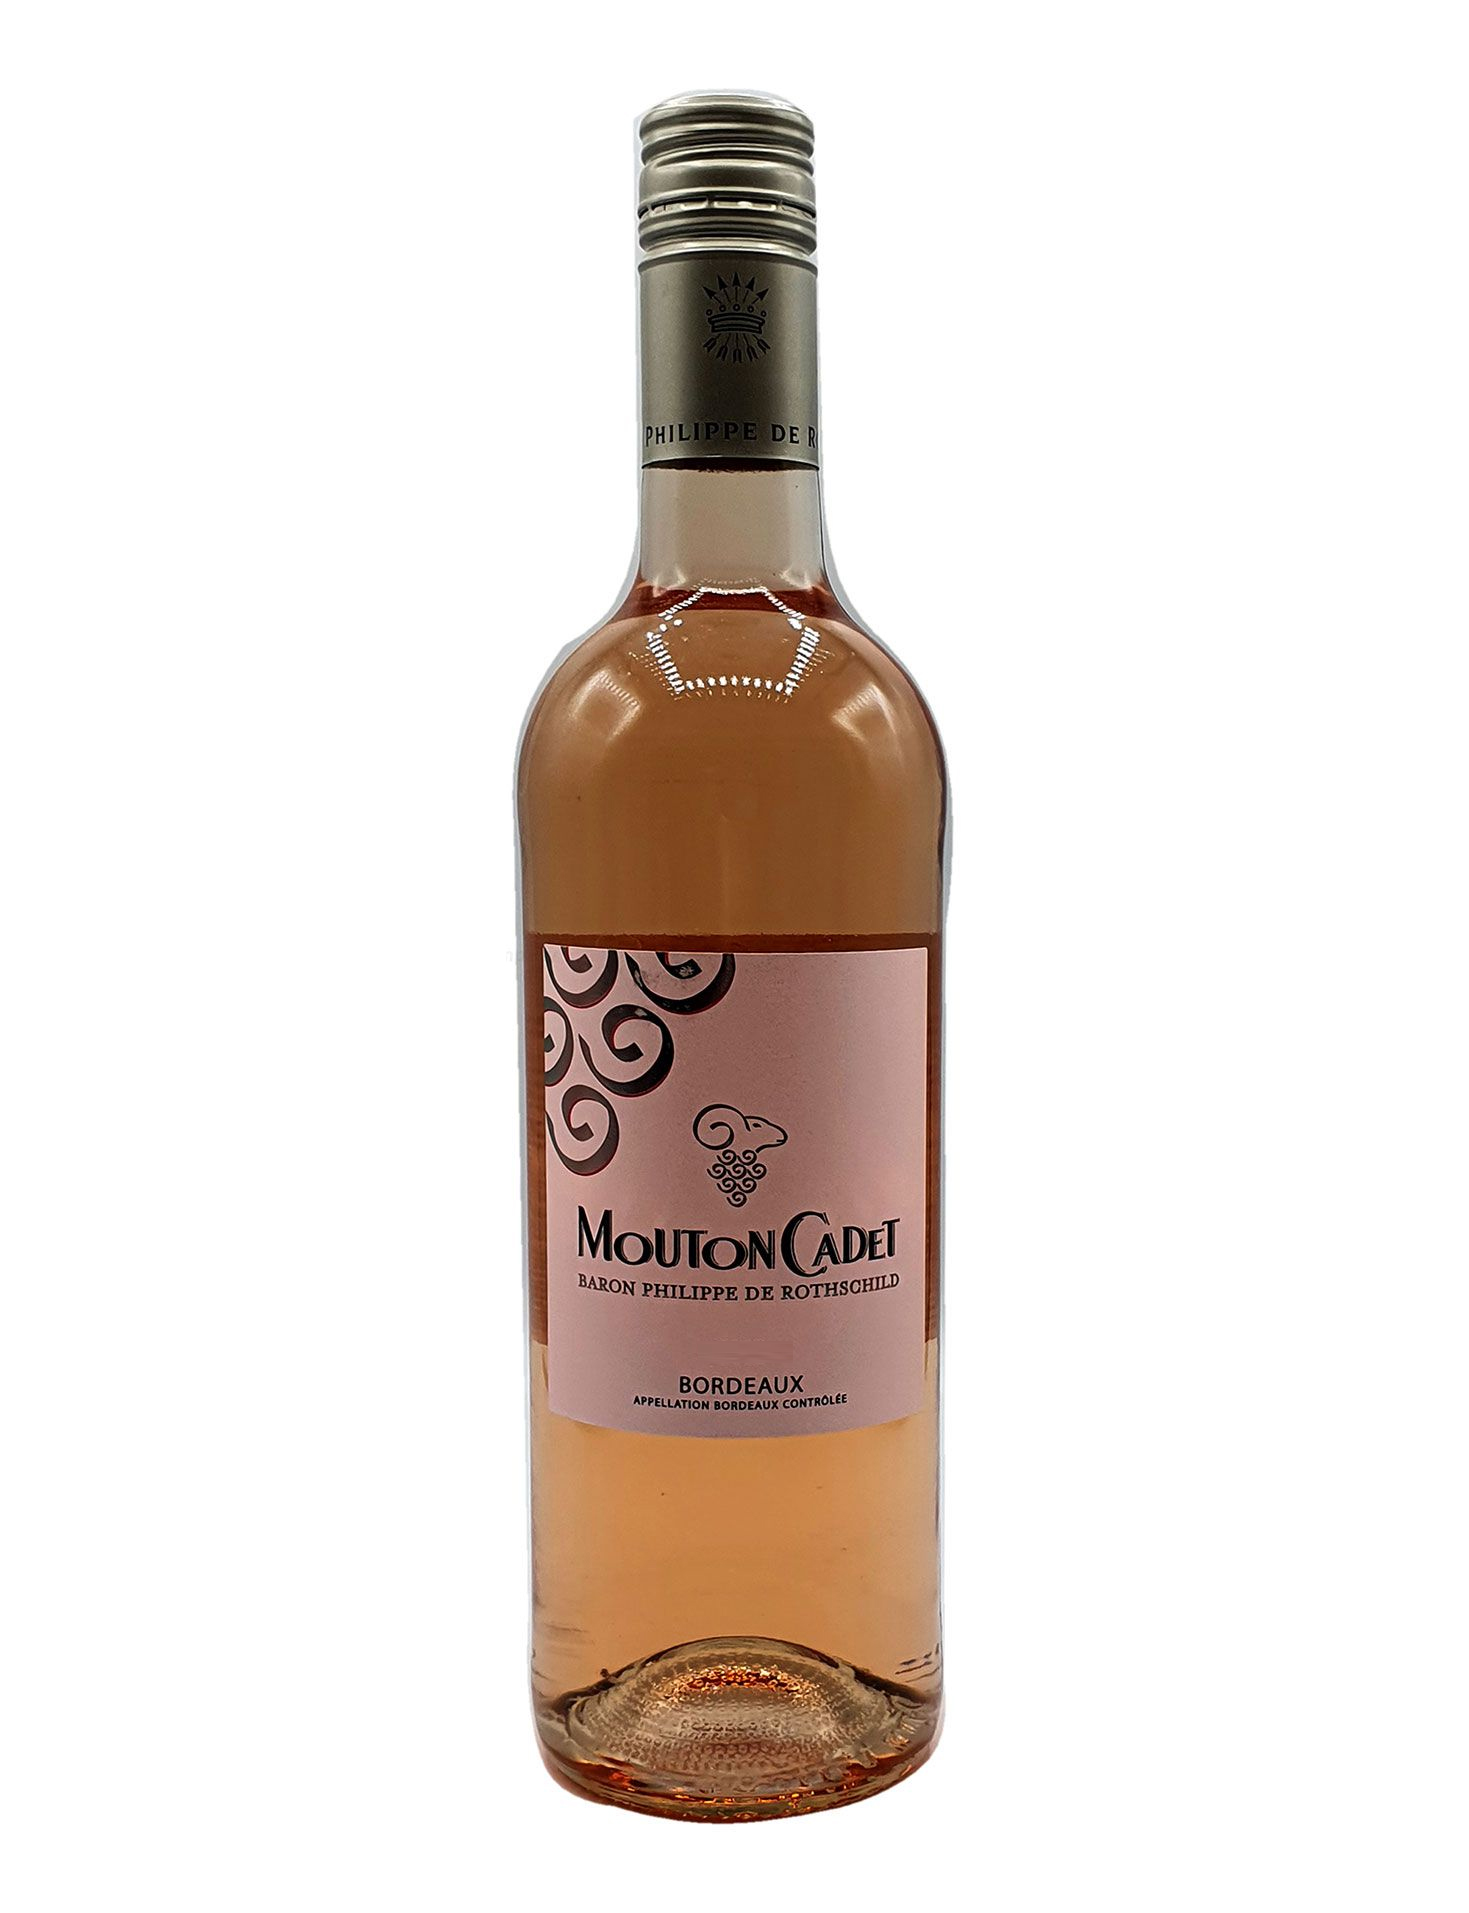 Rose Wein - Mouton Cadet Bordeaux / Baron Philippe De Rothschild 750ml (12% Vol)- [Enthält Sulfite]